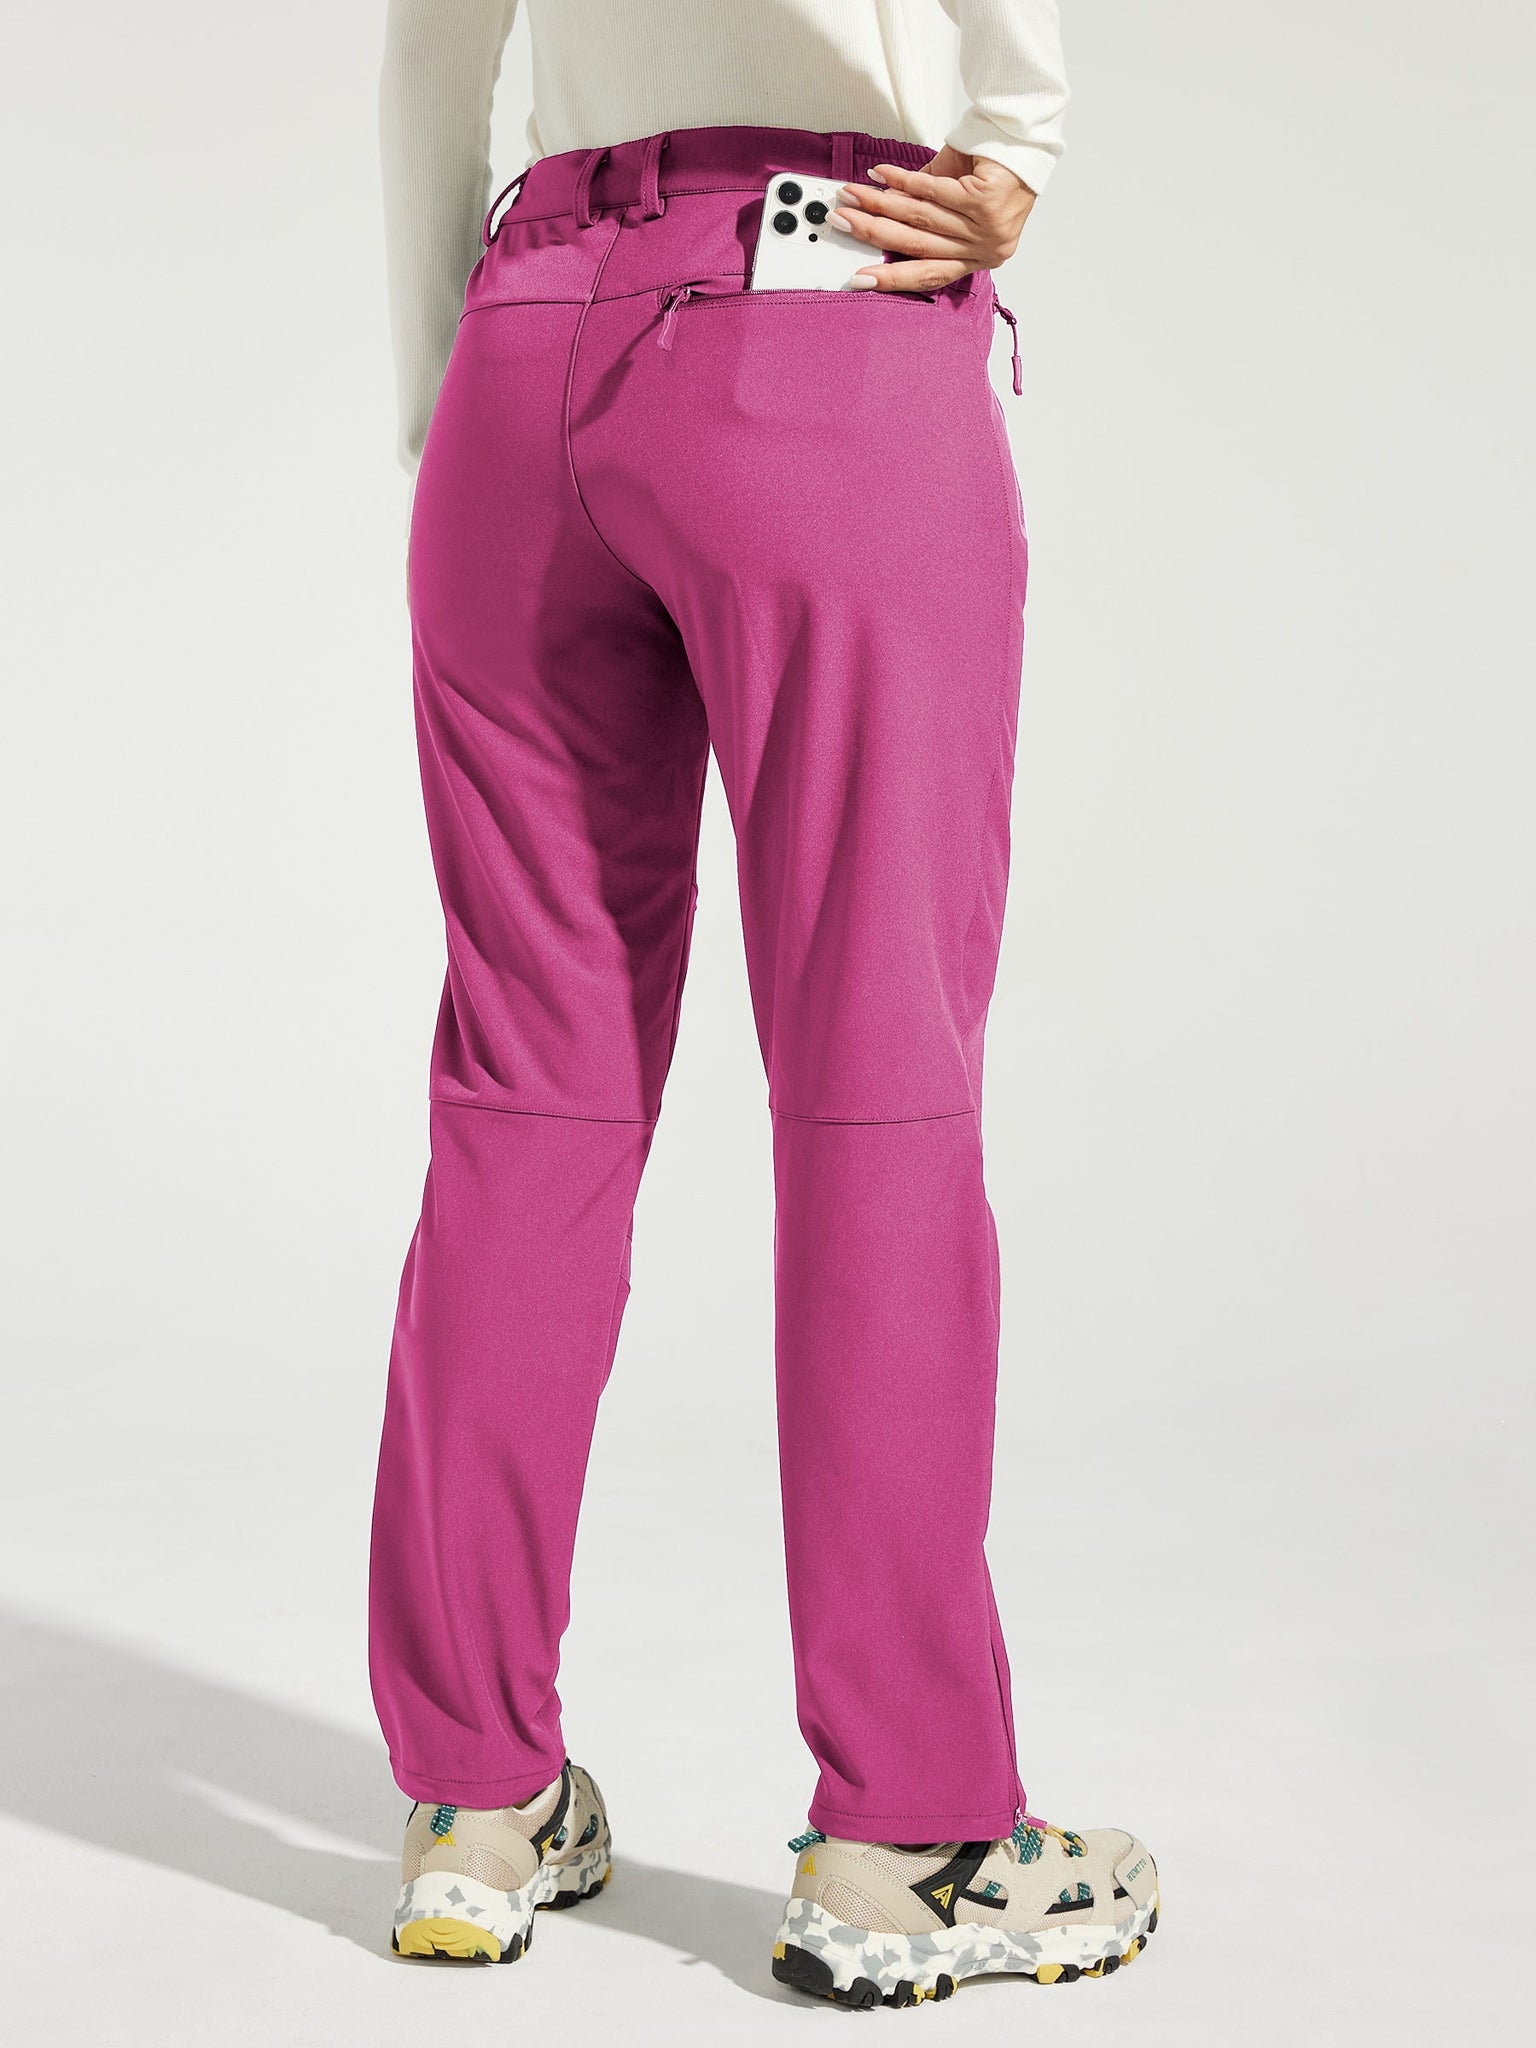 Women's Fleece Lined Snow Cargo Pants_Pink_model2